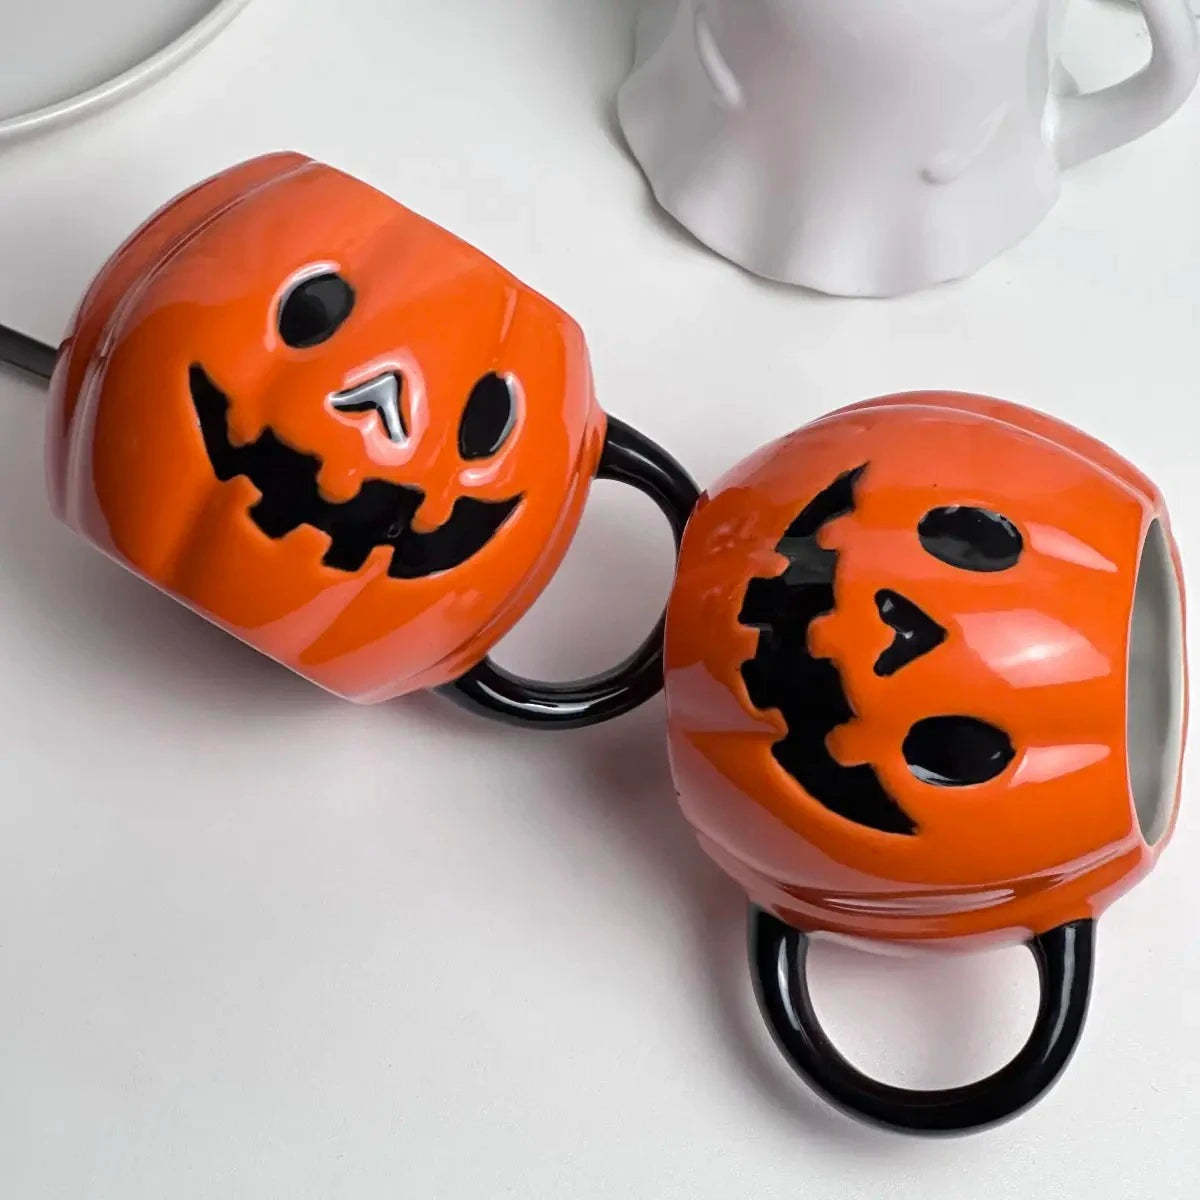 Two Pumpkin Halloween mugs on a white table